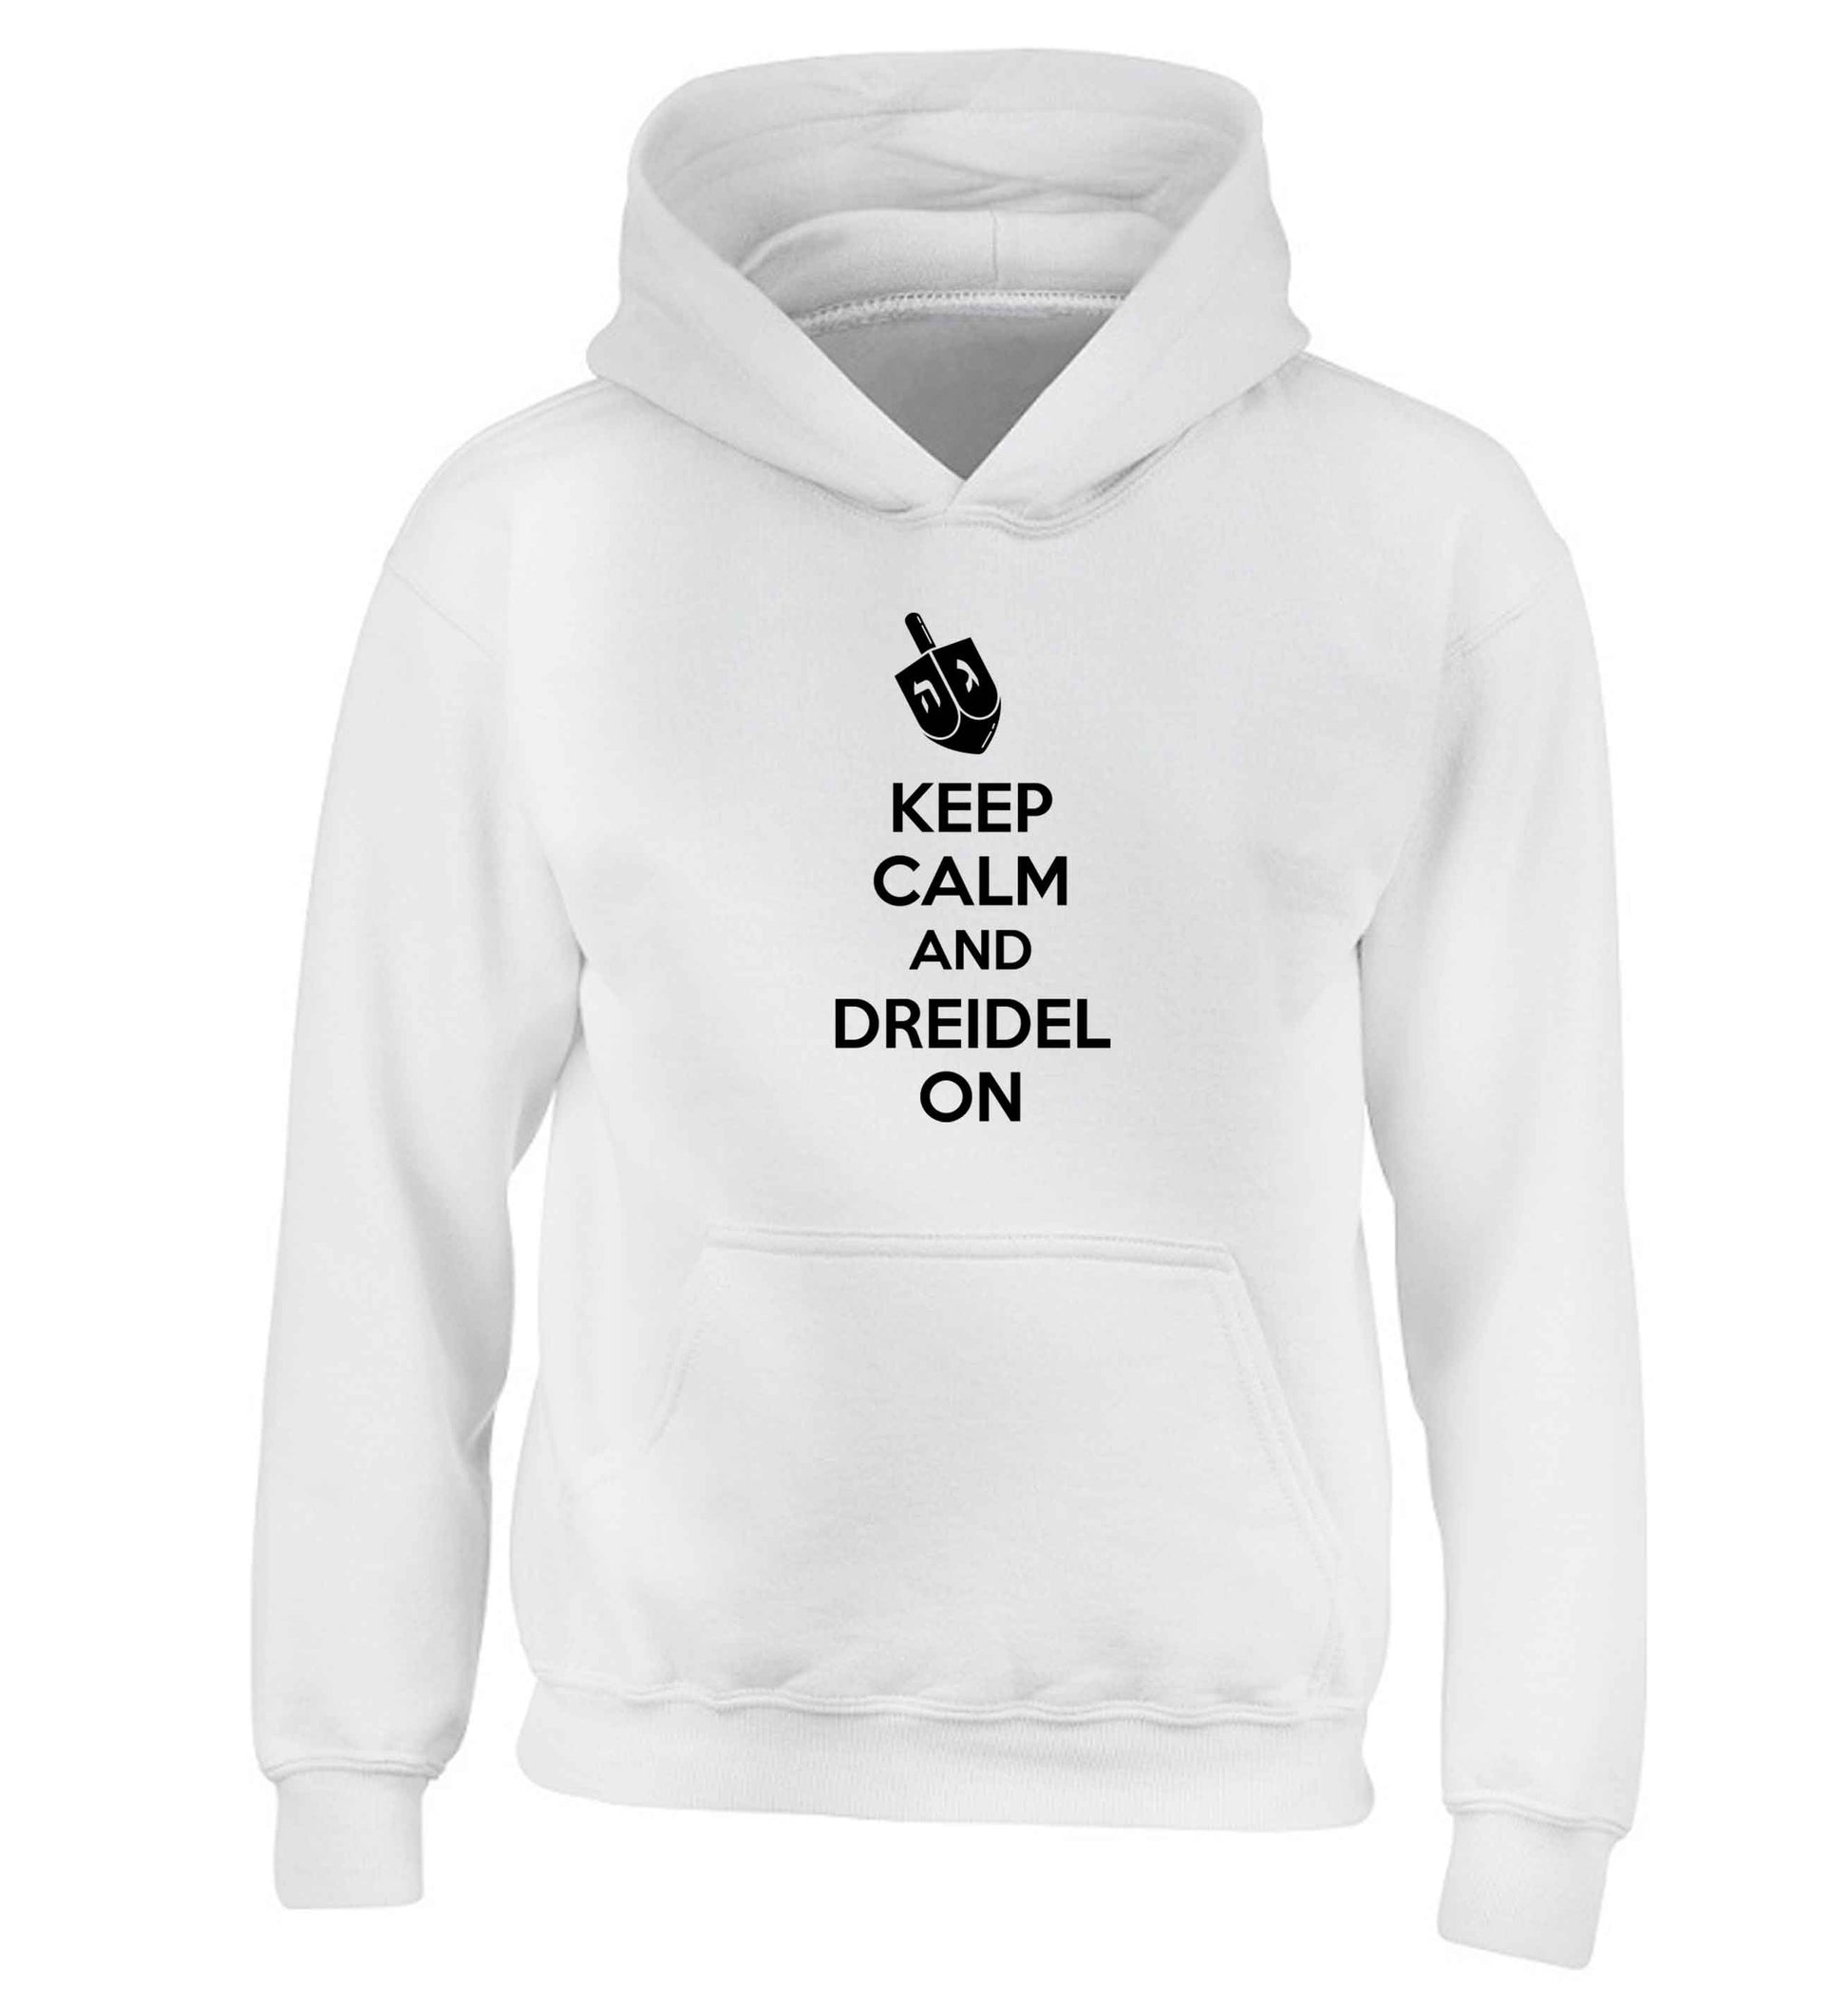 Keep calm and dreidel on children's white hoodie 12-13 Years